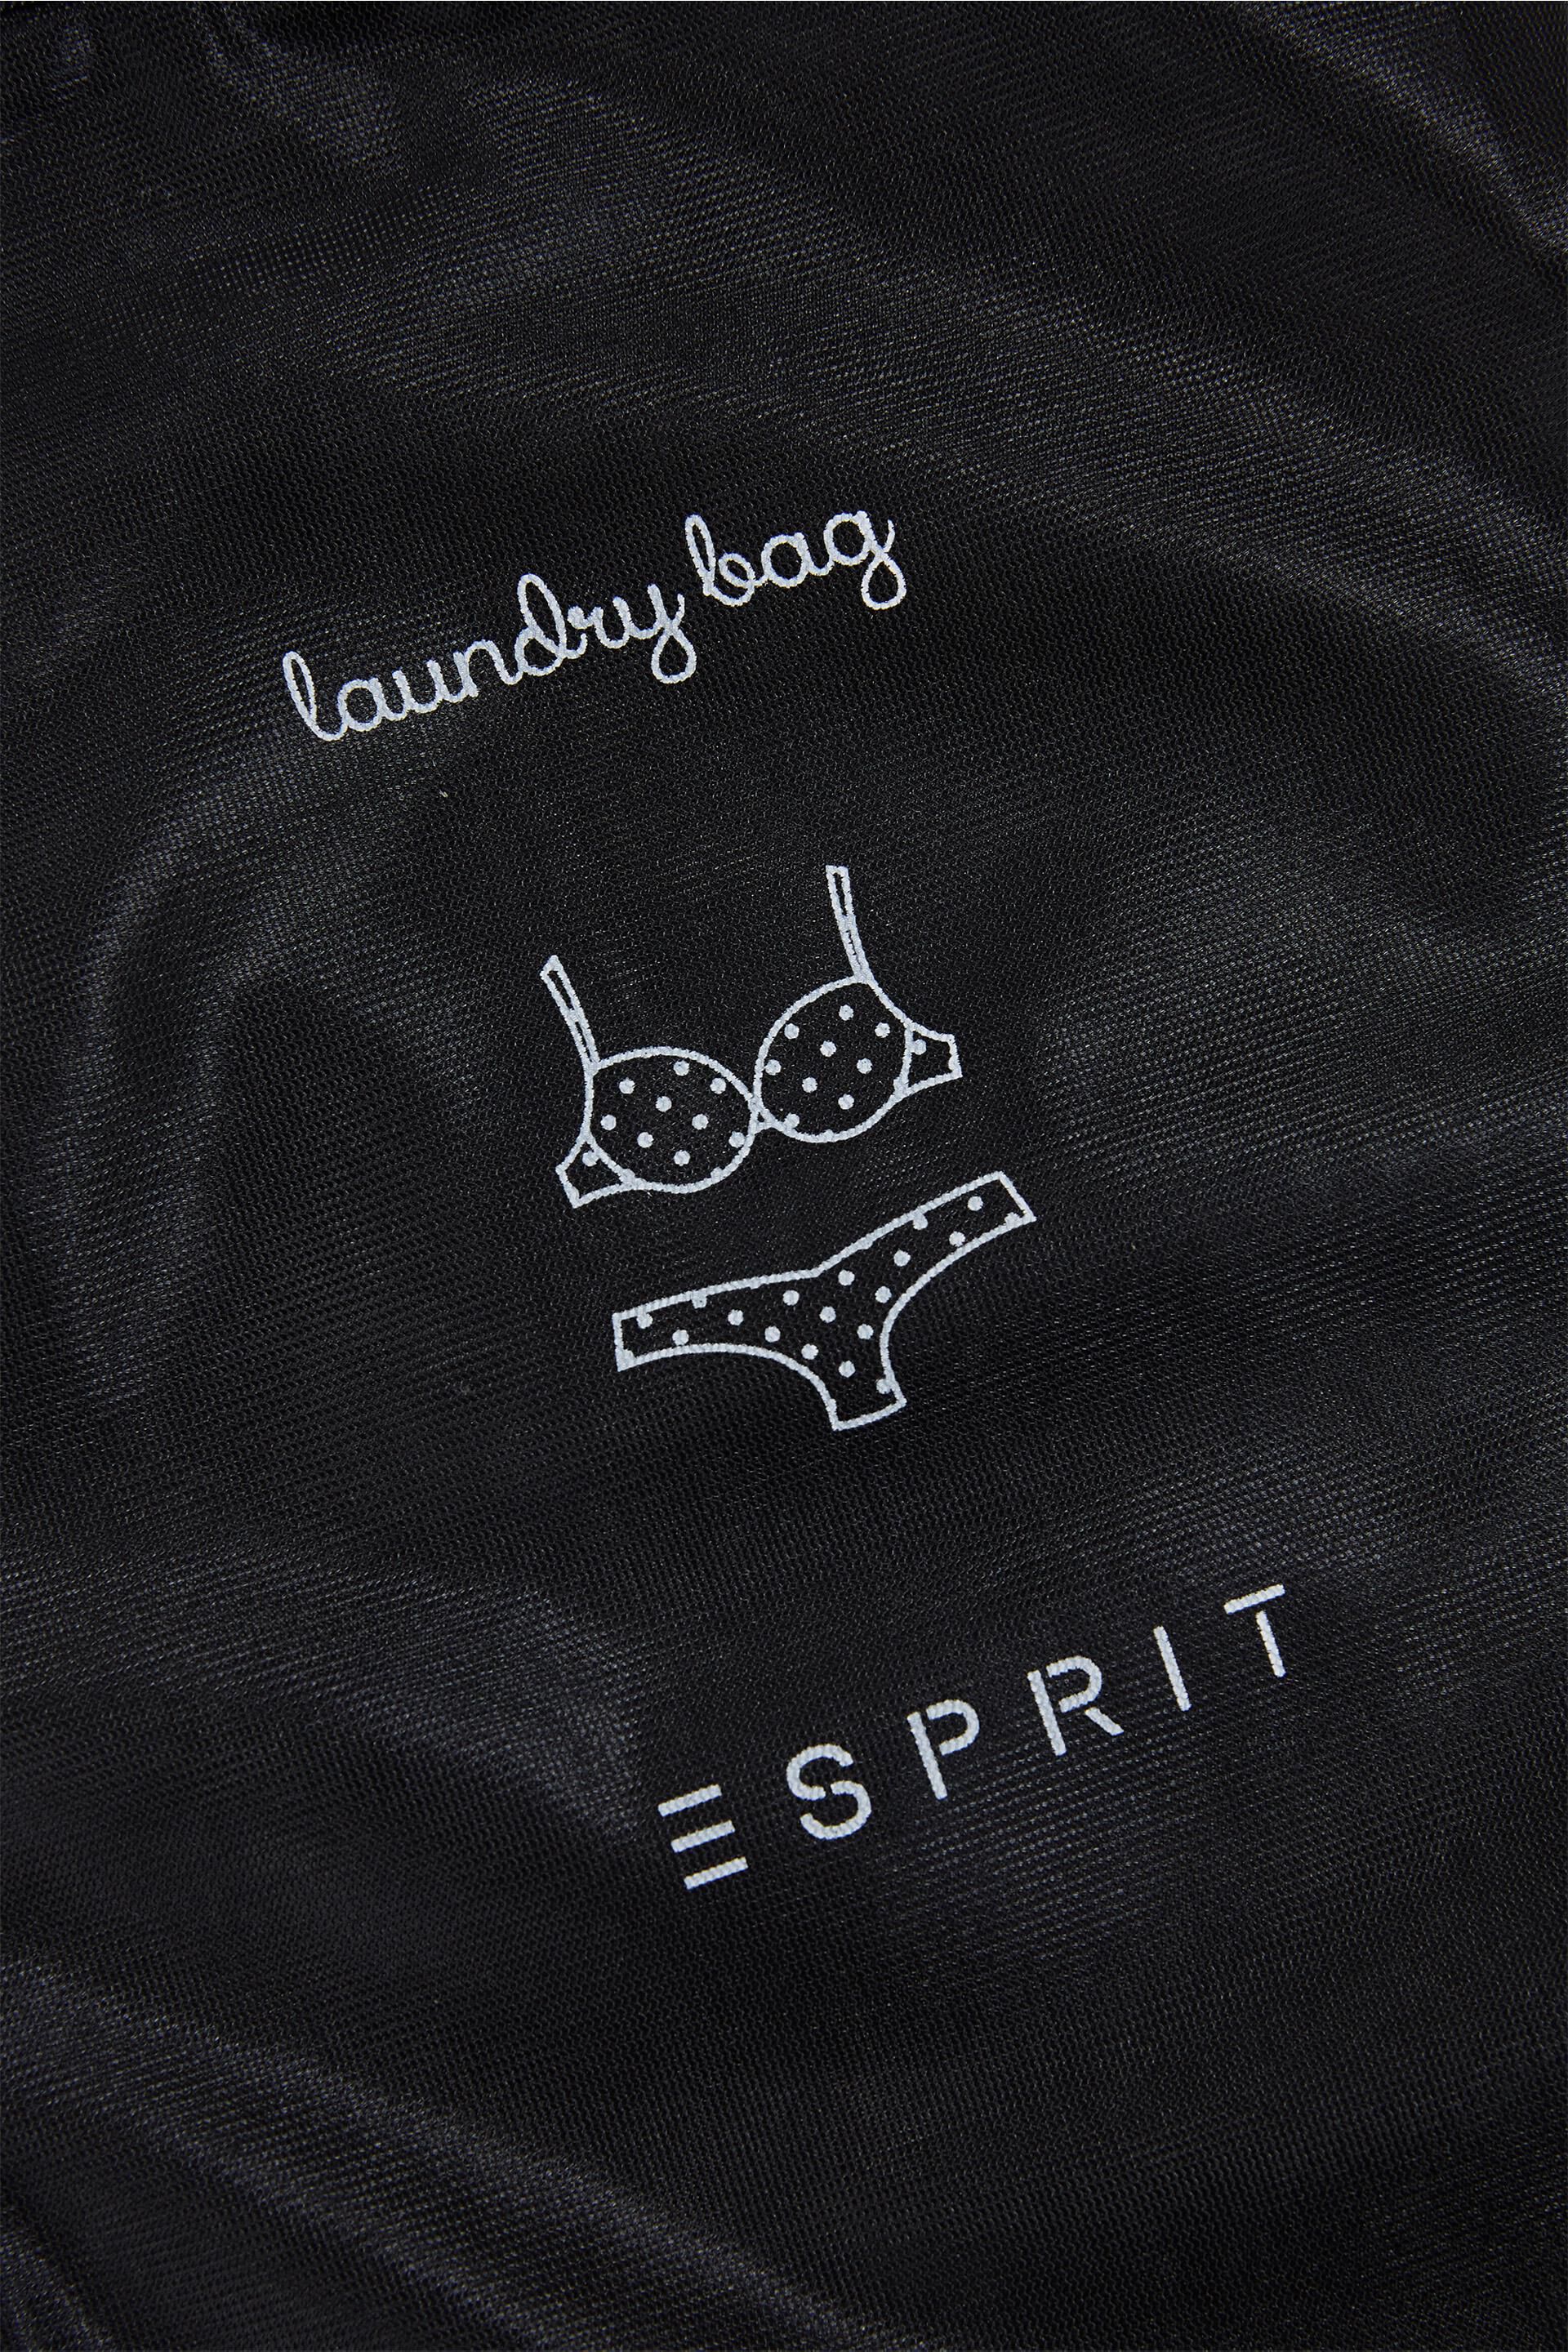 Esprit laundry Zip bag